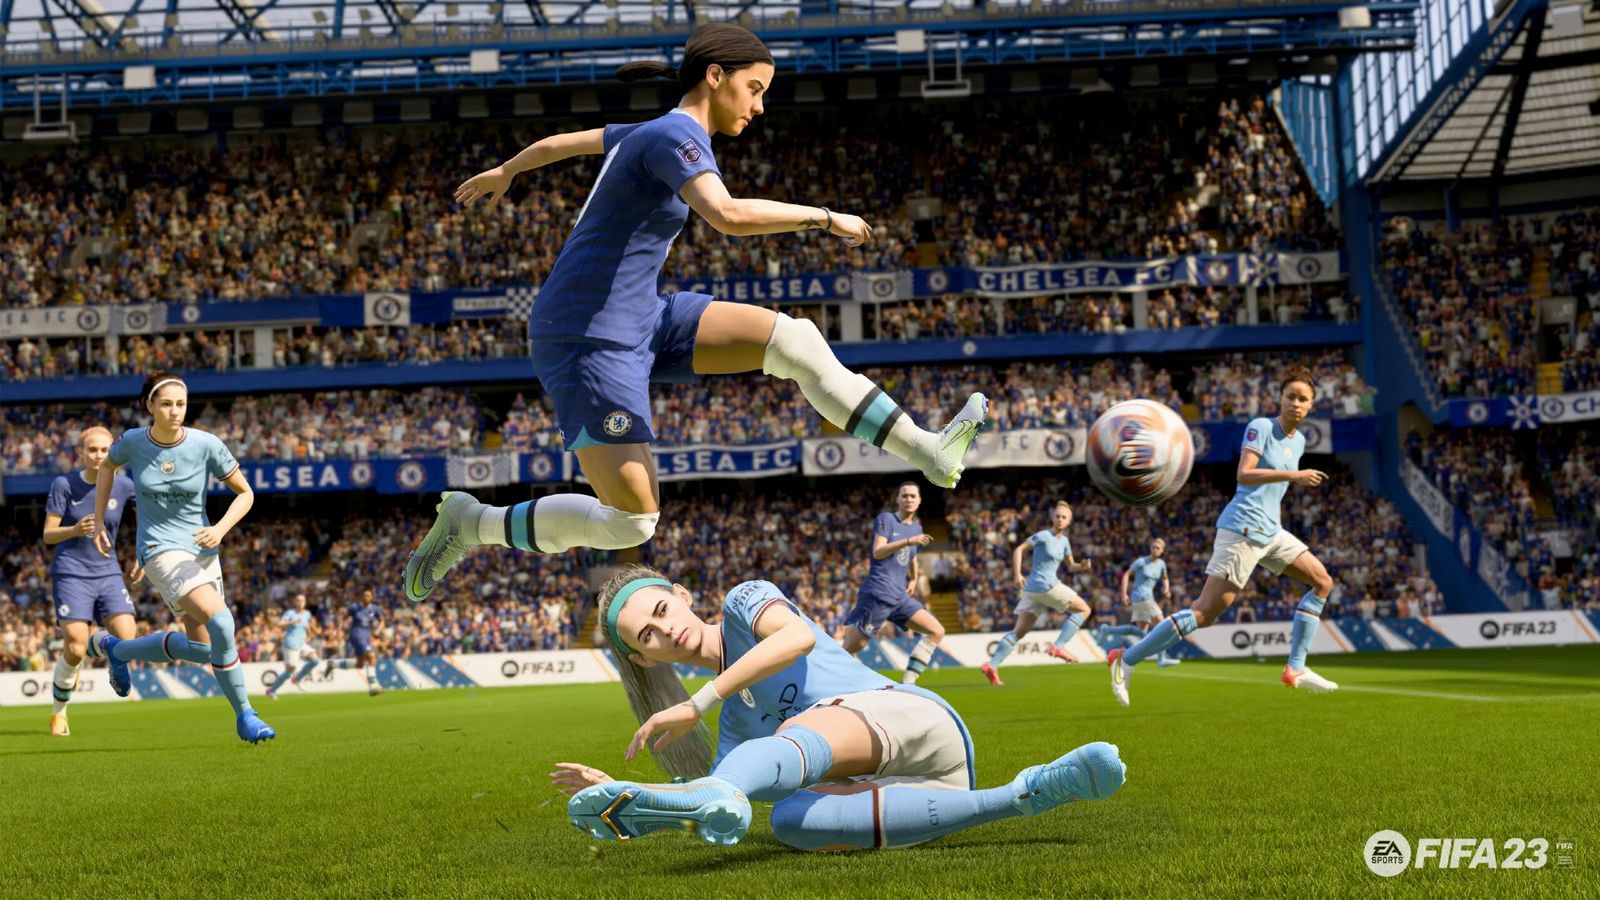 Image of Sam Kerr dribbling the ball in FIFA 23.